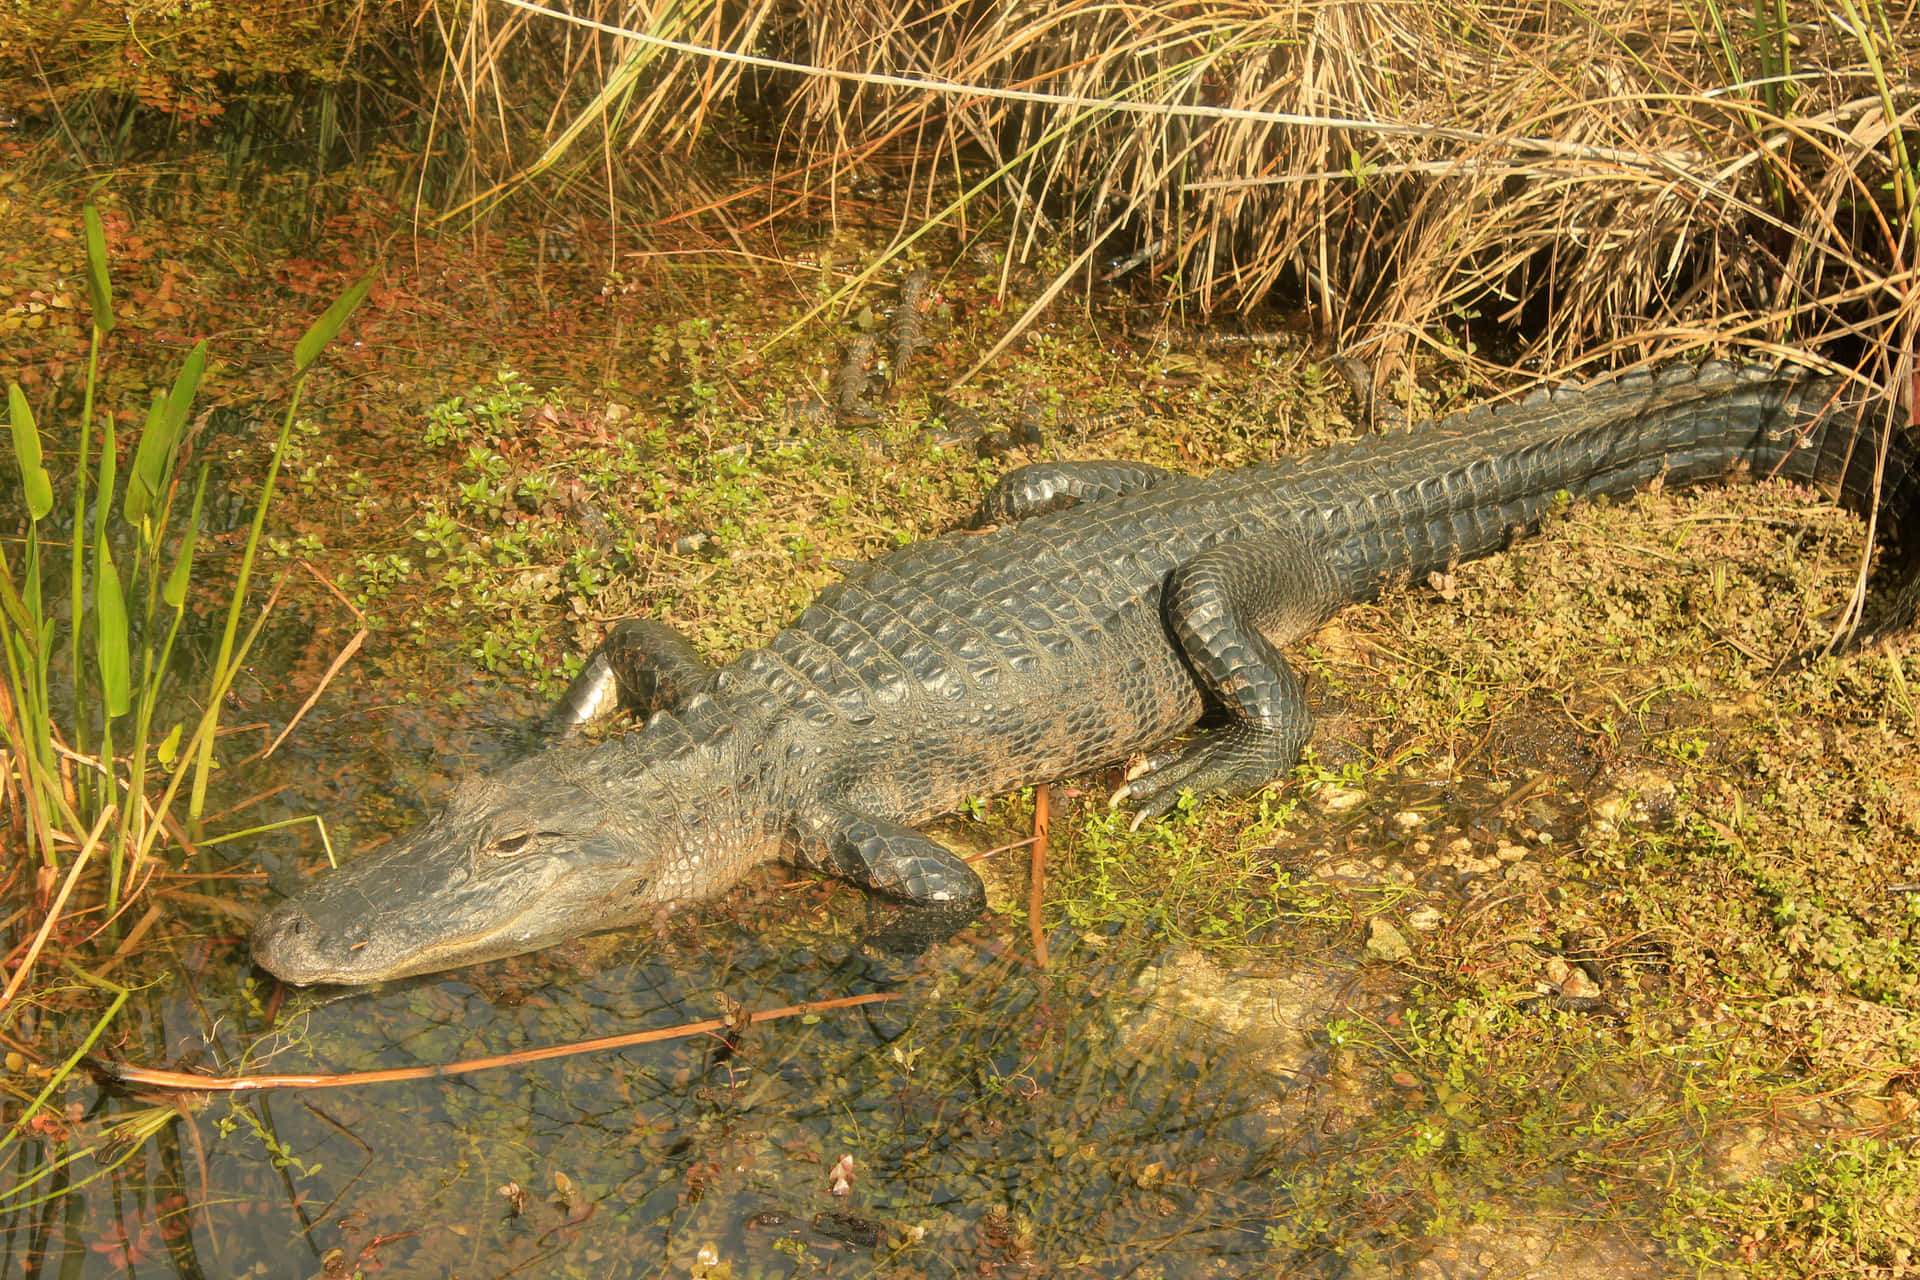 A Close-up View of an Alligator